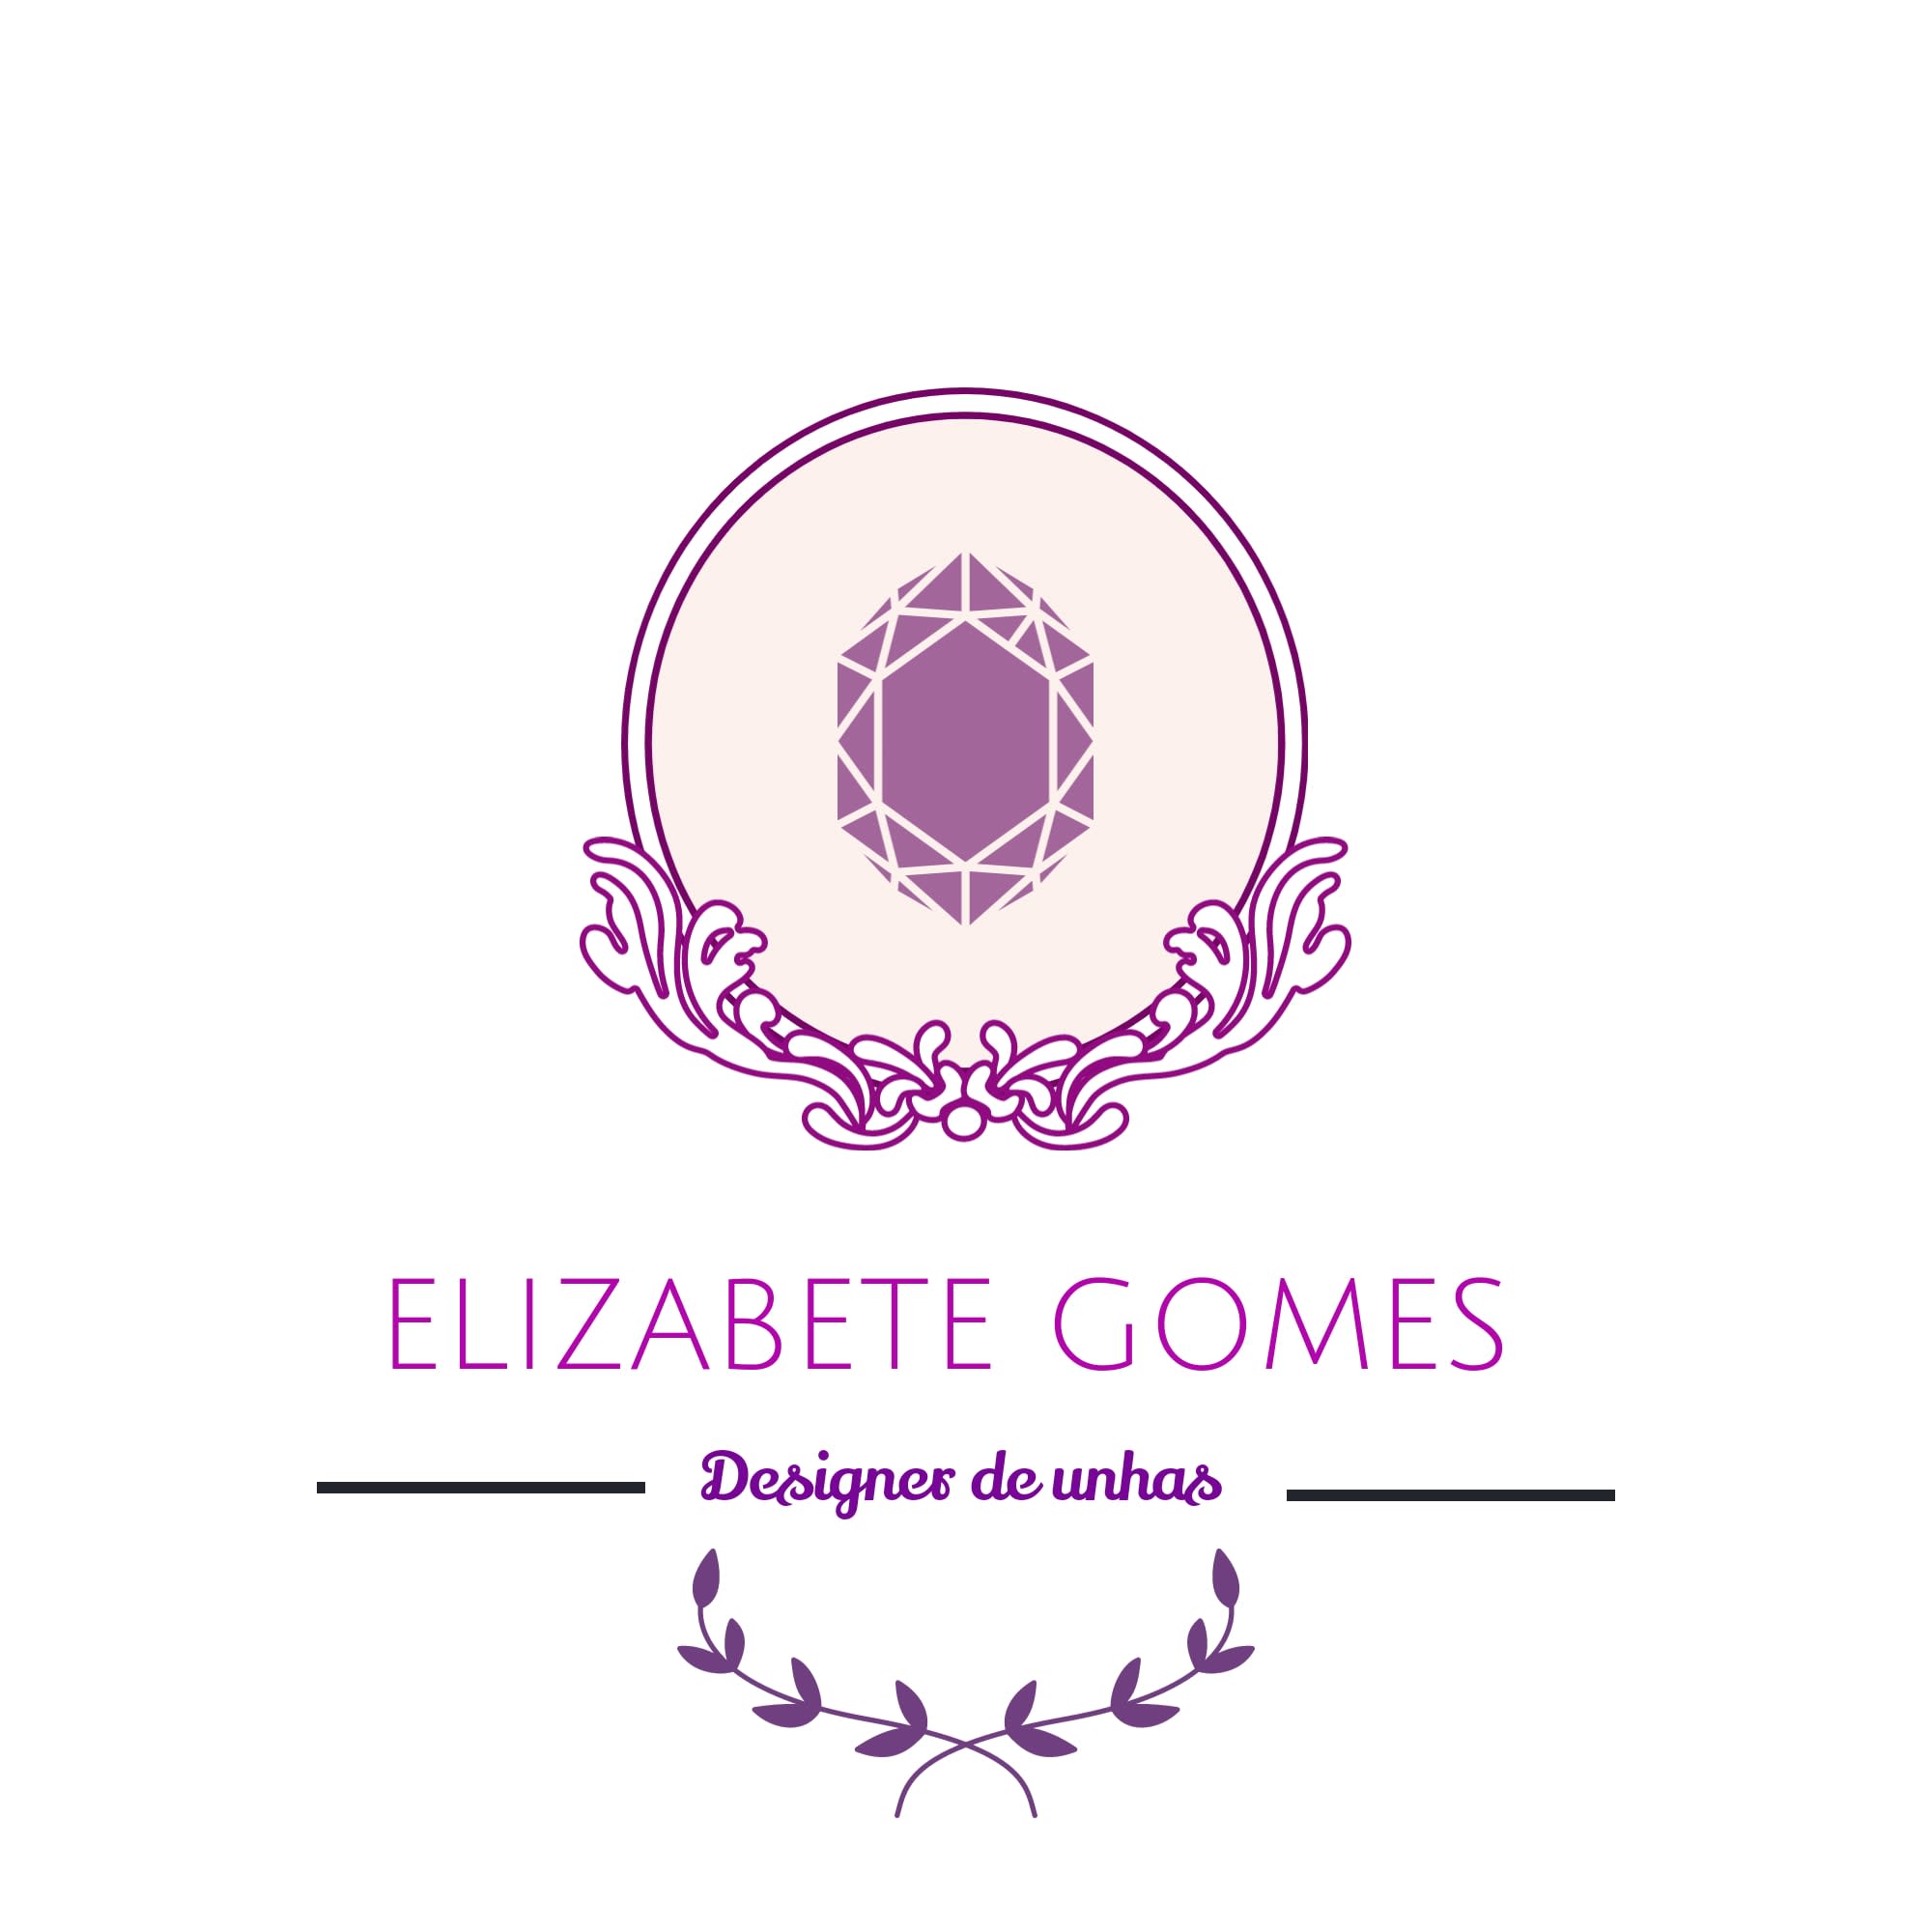 Elizabete Gomes